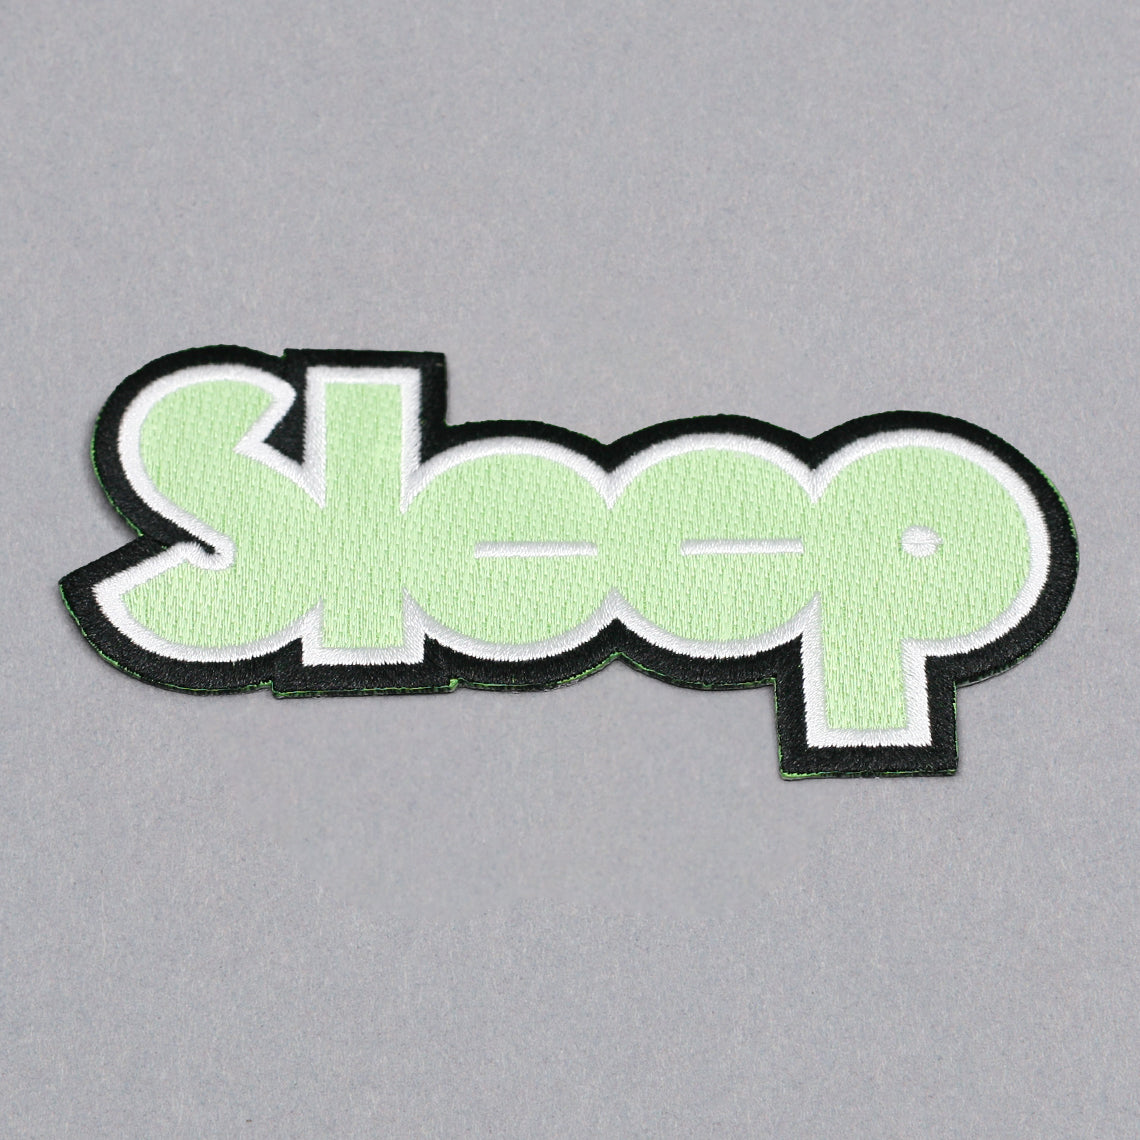 sleep band logo